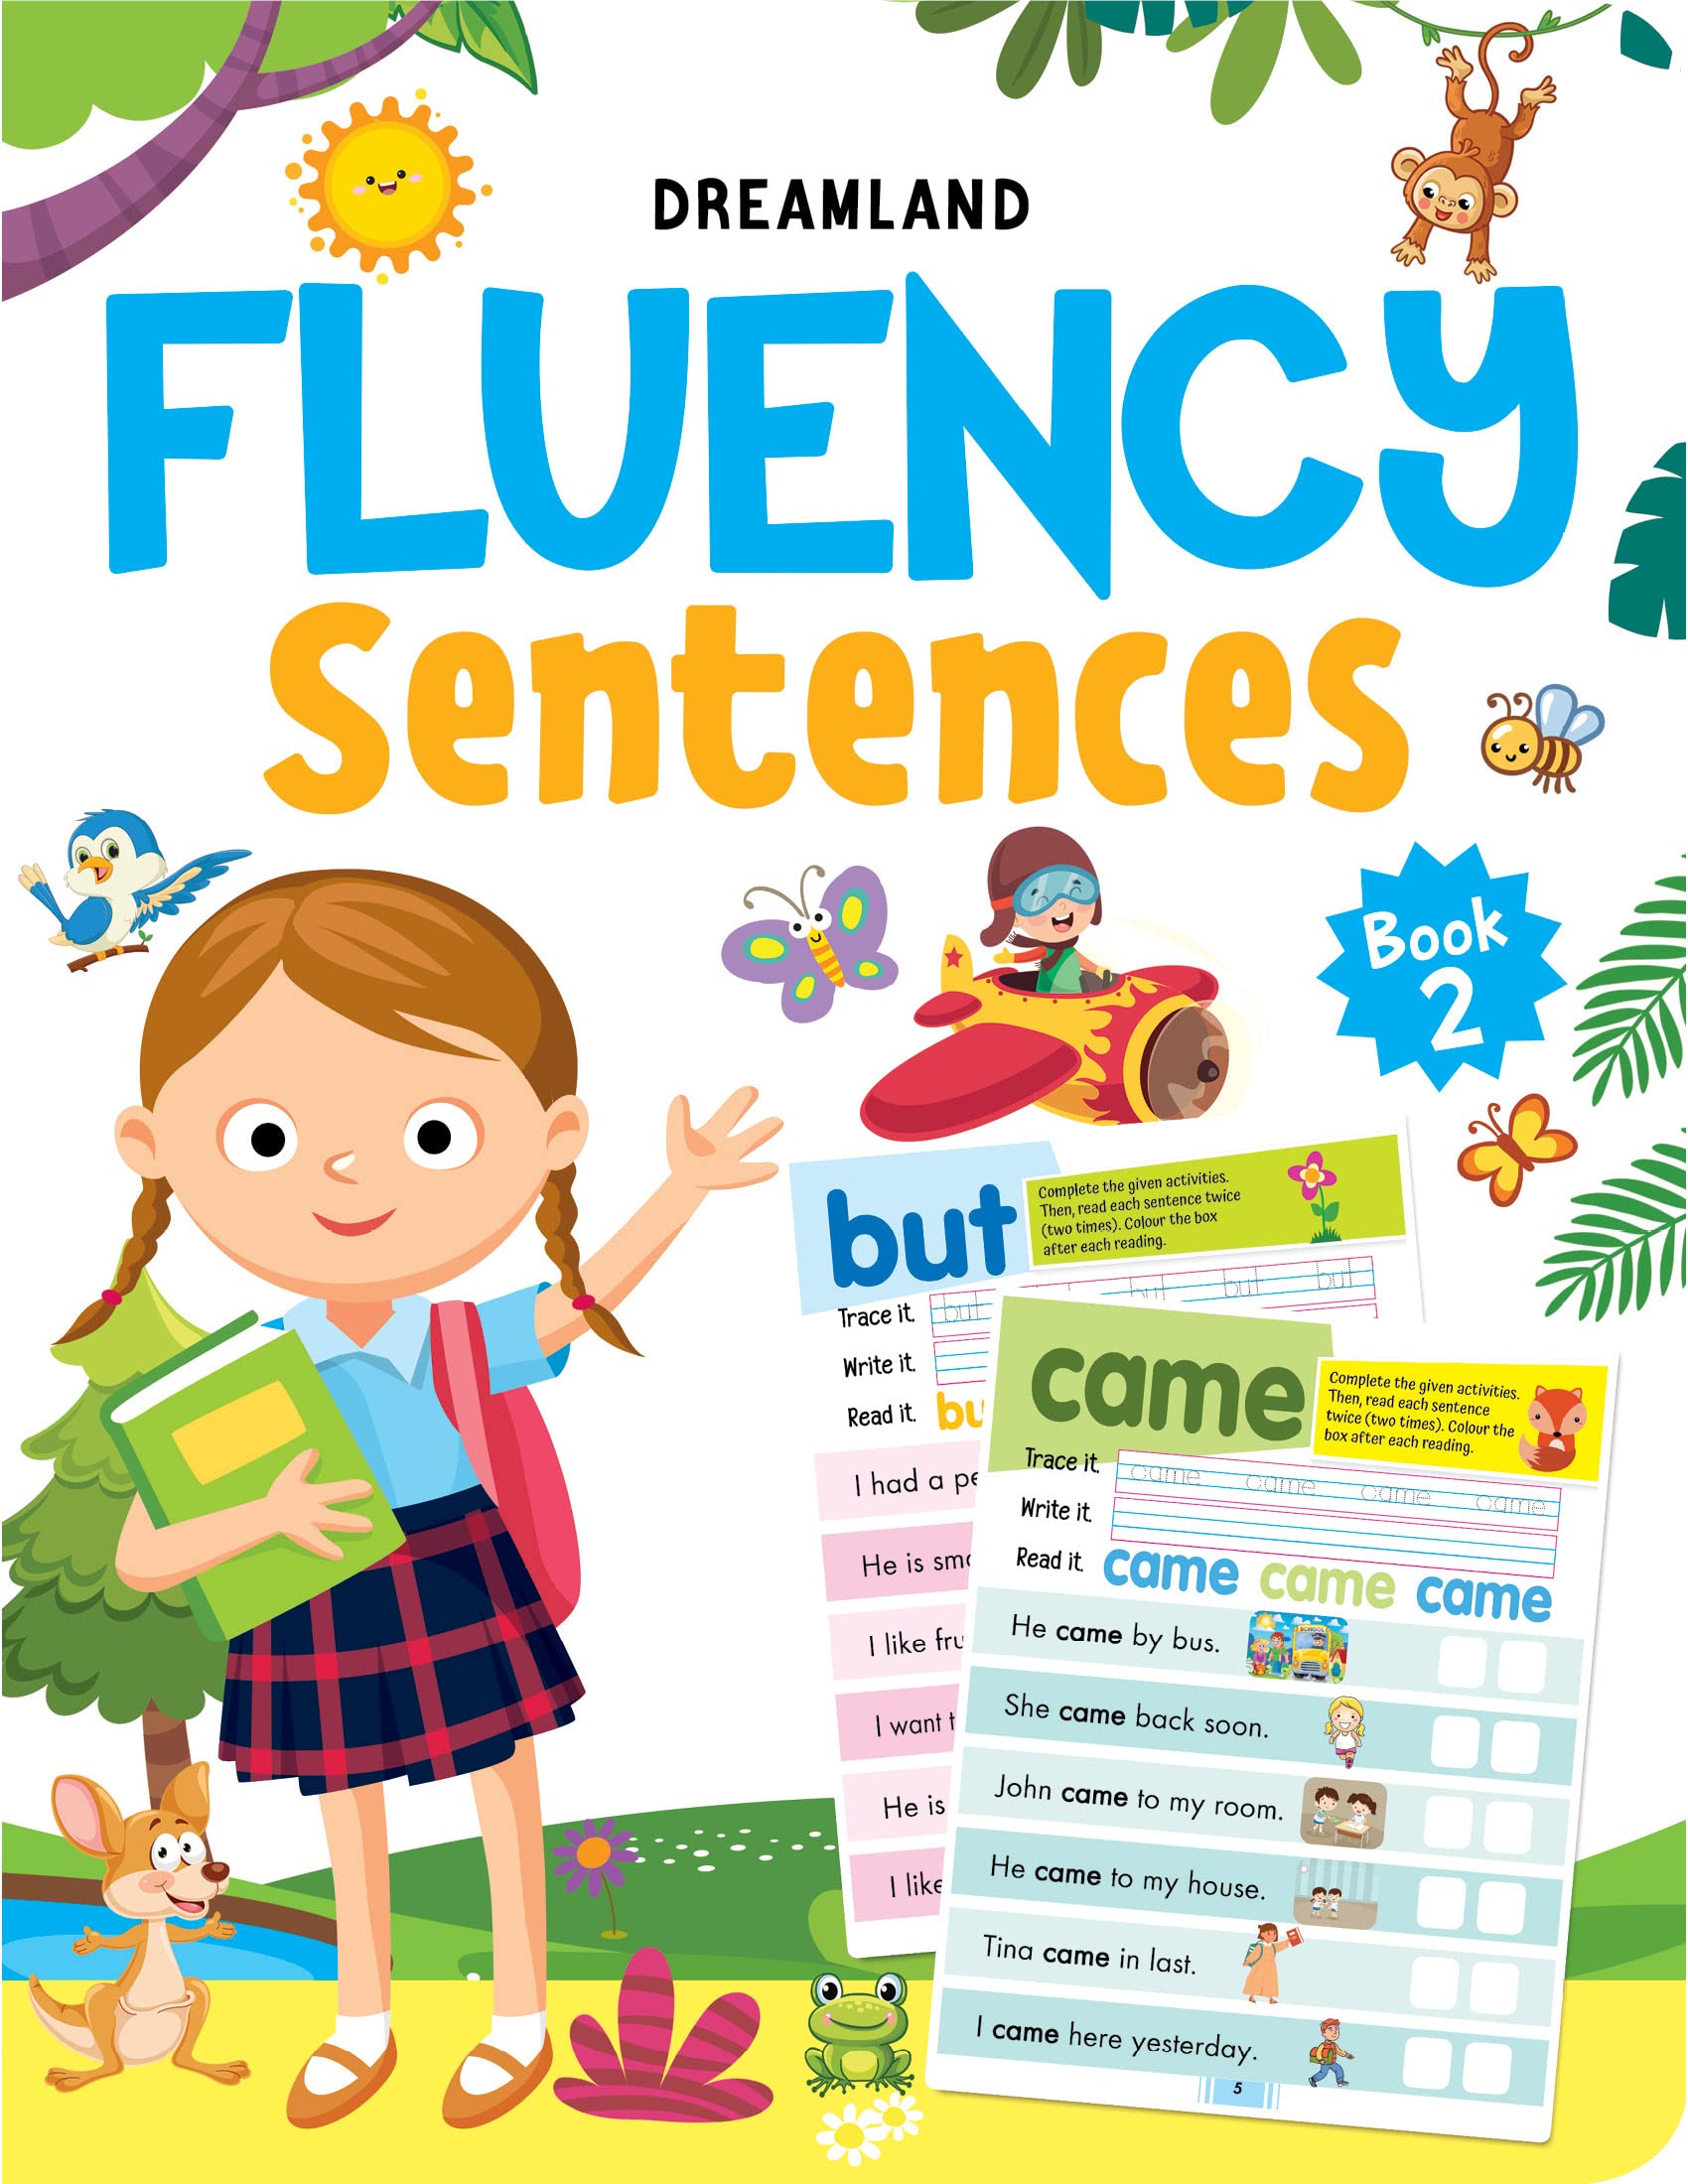 Fluency Sentences Book 2 for Children Age 4 -8 Years